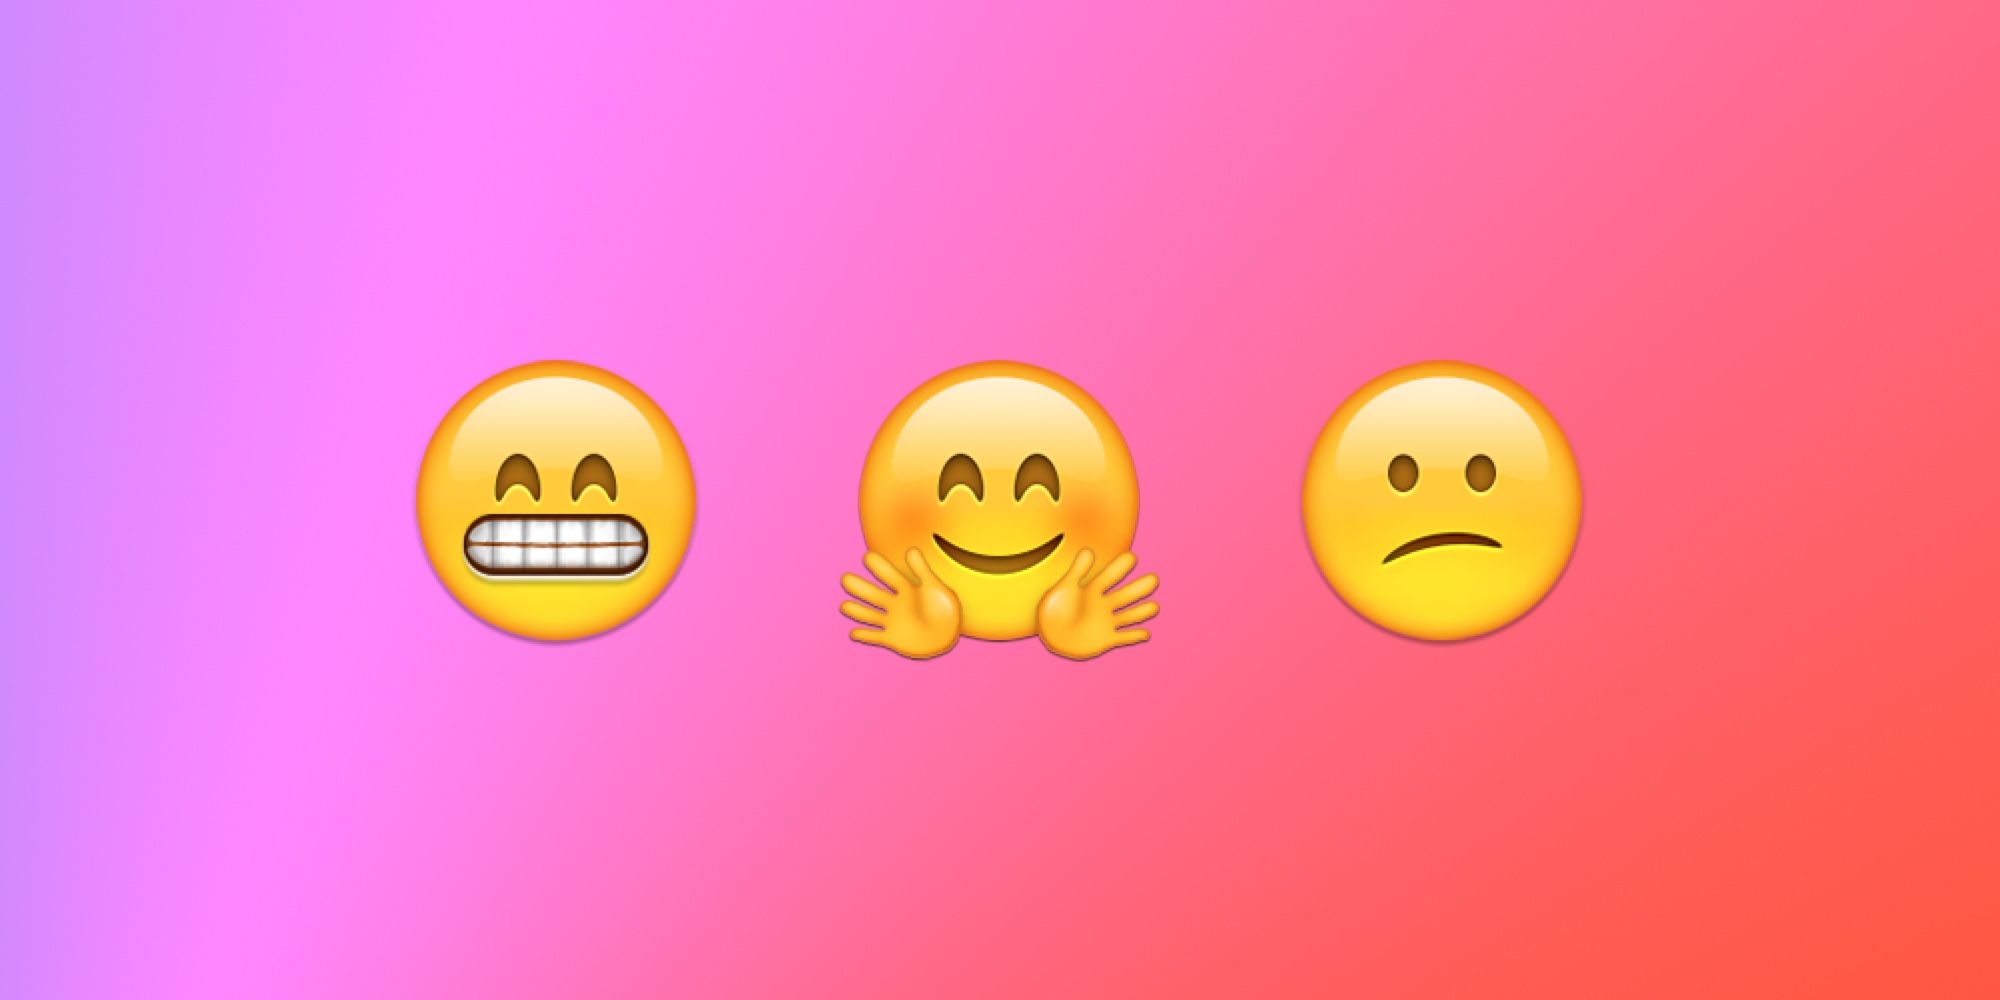 Five Emojis Apple Should Change in iOS 10